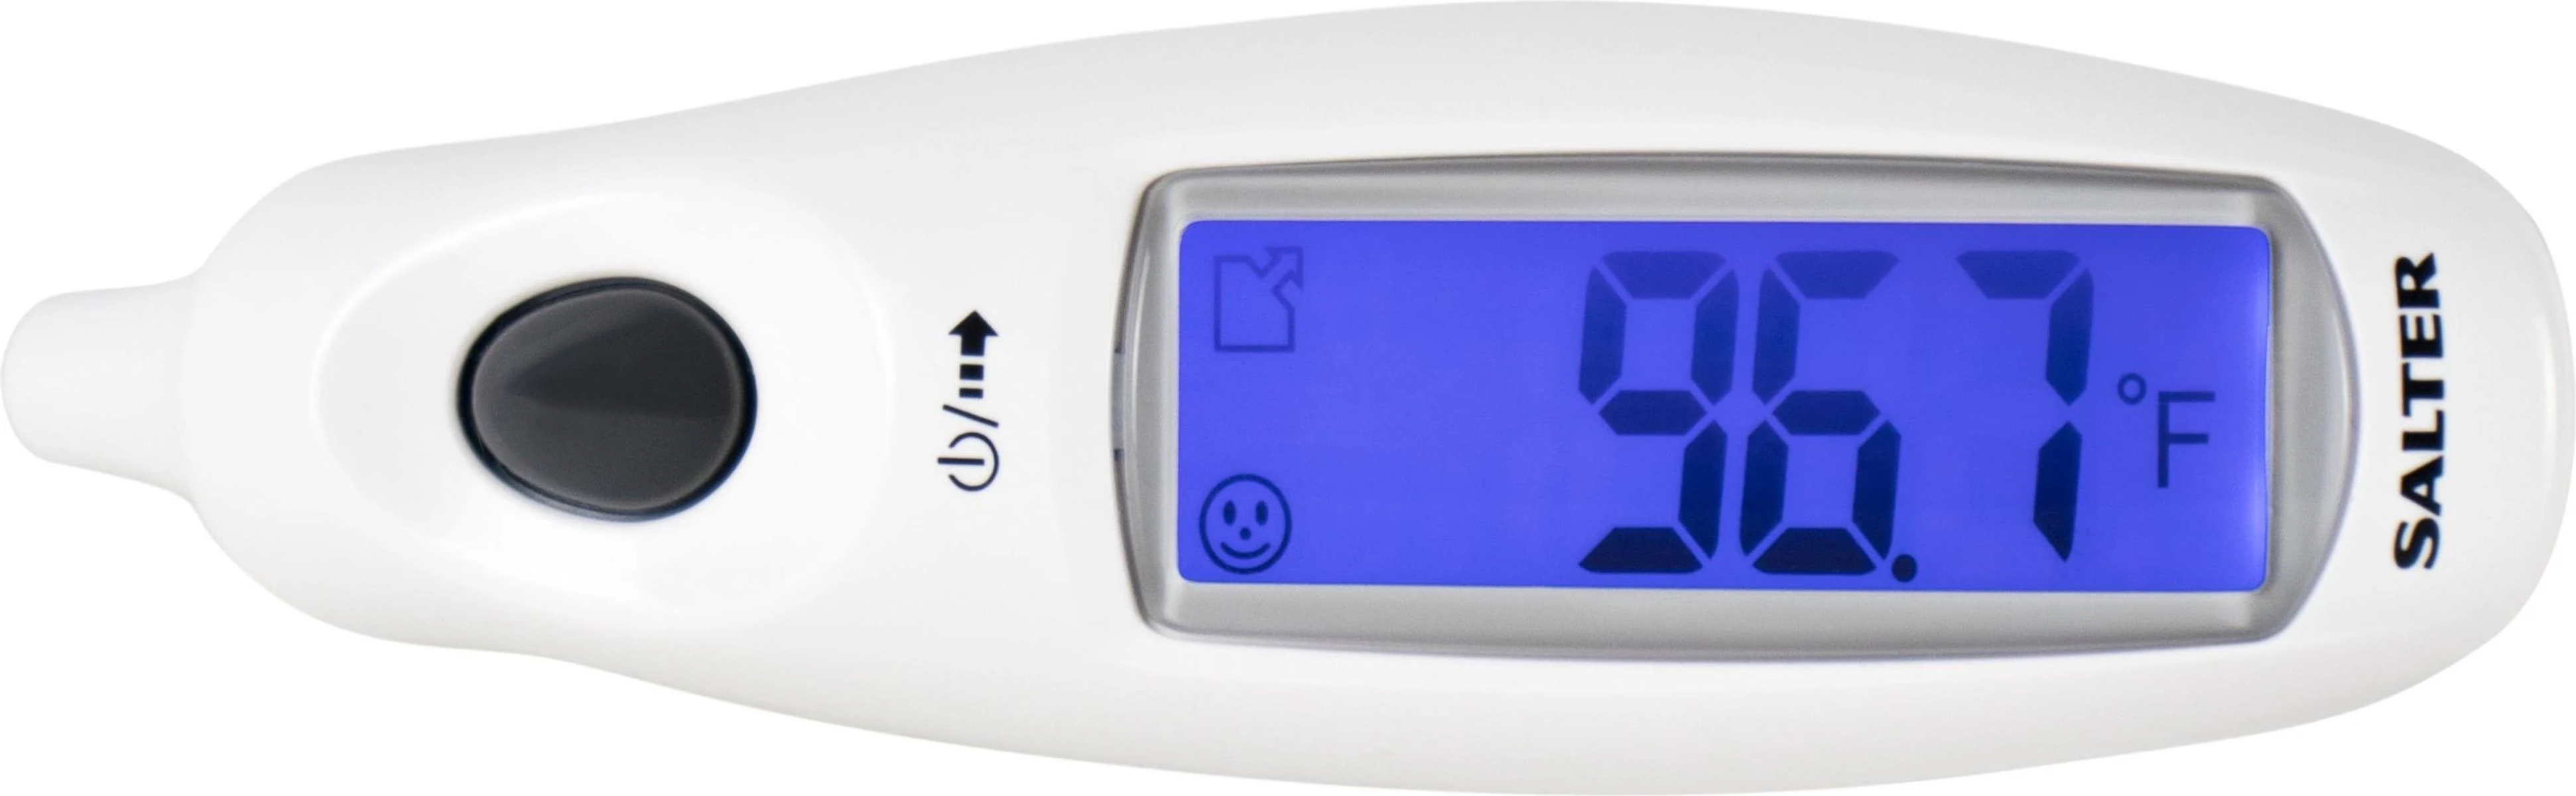 SALTER TE-150-EU Fieberthermometer (Messart: Infrarotmessung) kontaktlose